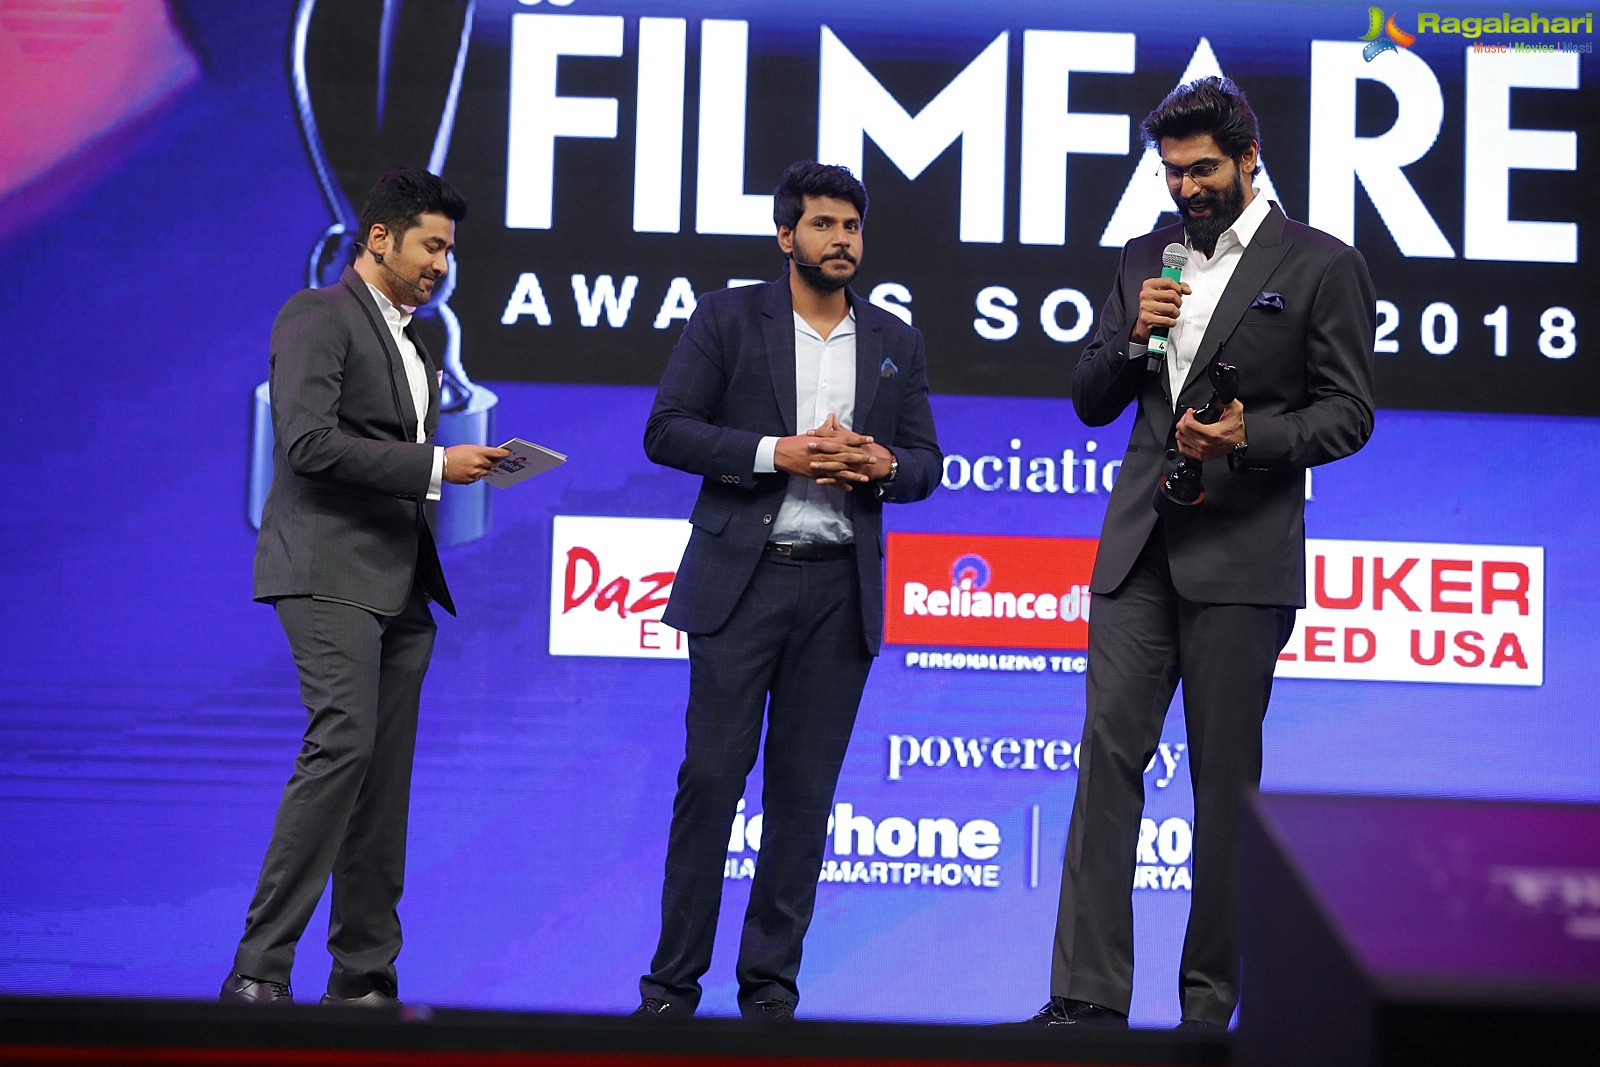 Inside 65th Jio Filmfare Awards South 2018